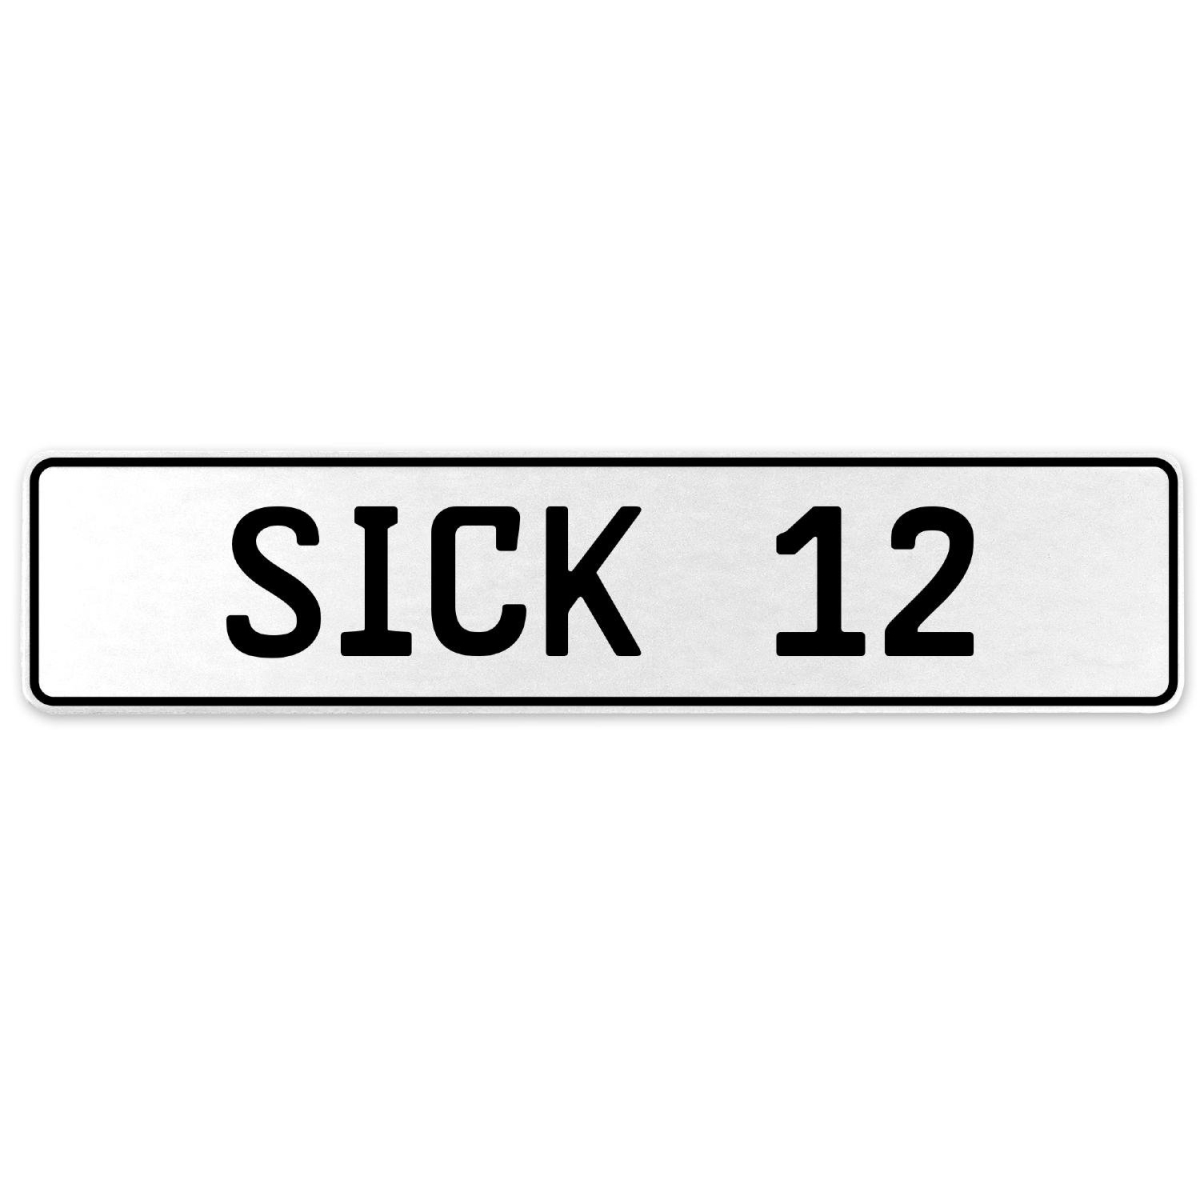 554312 Sick 12 - White Aluminum Street Sign Mancave Euro Plate Name Door Sign Wall